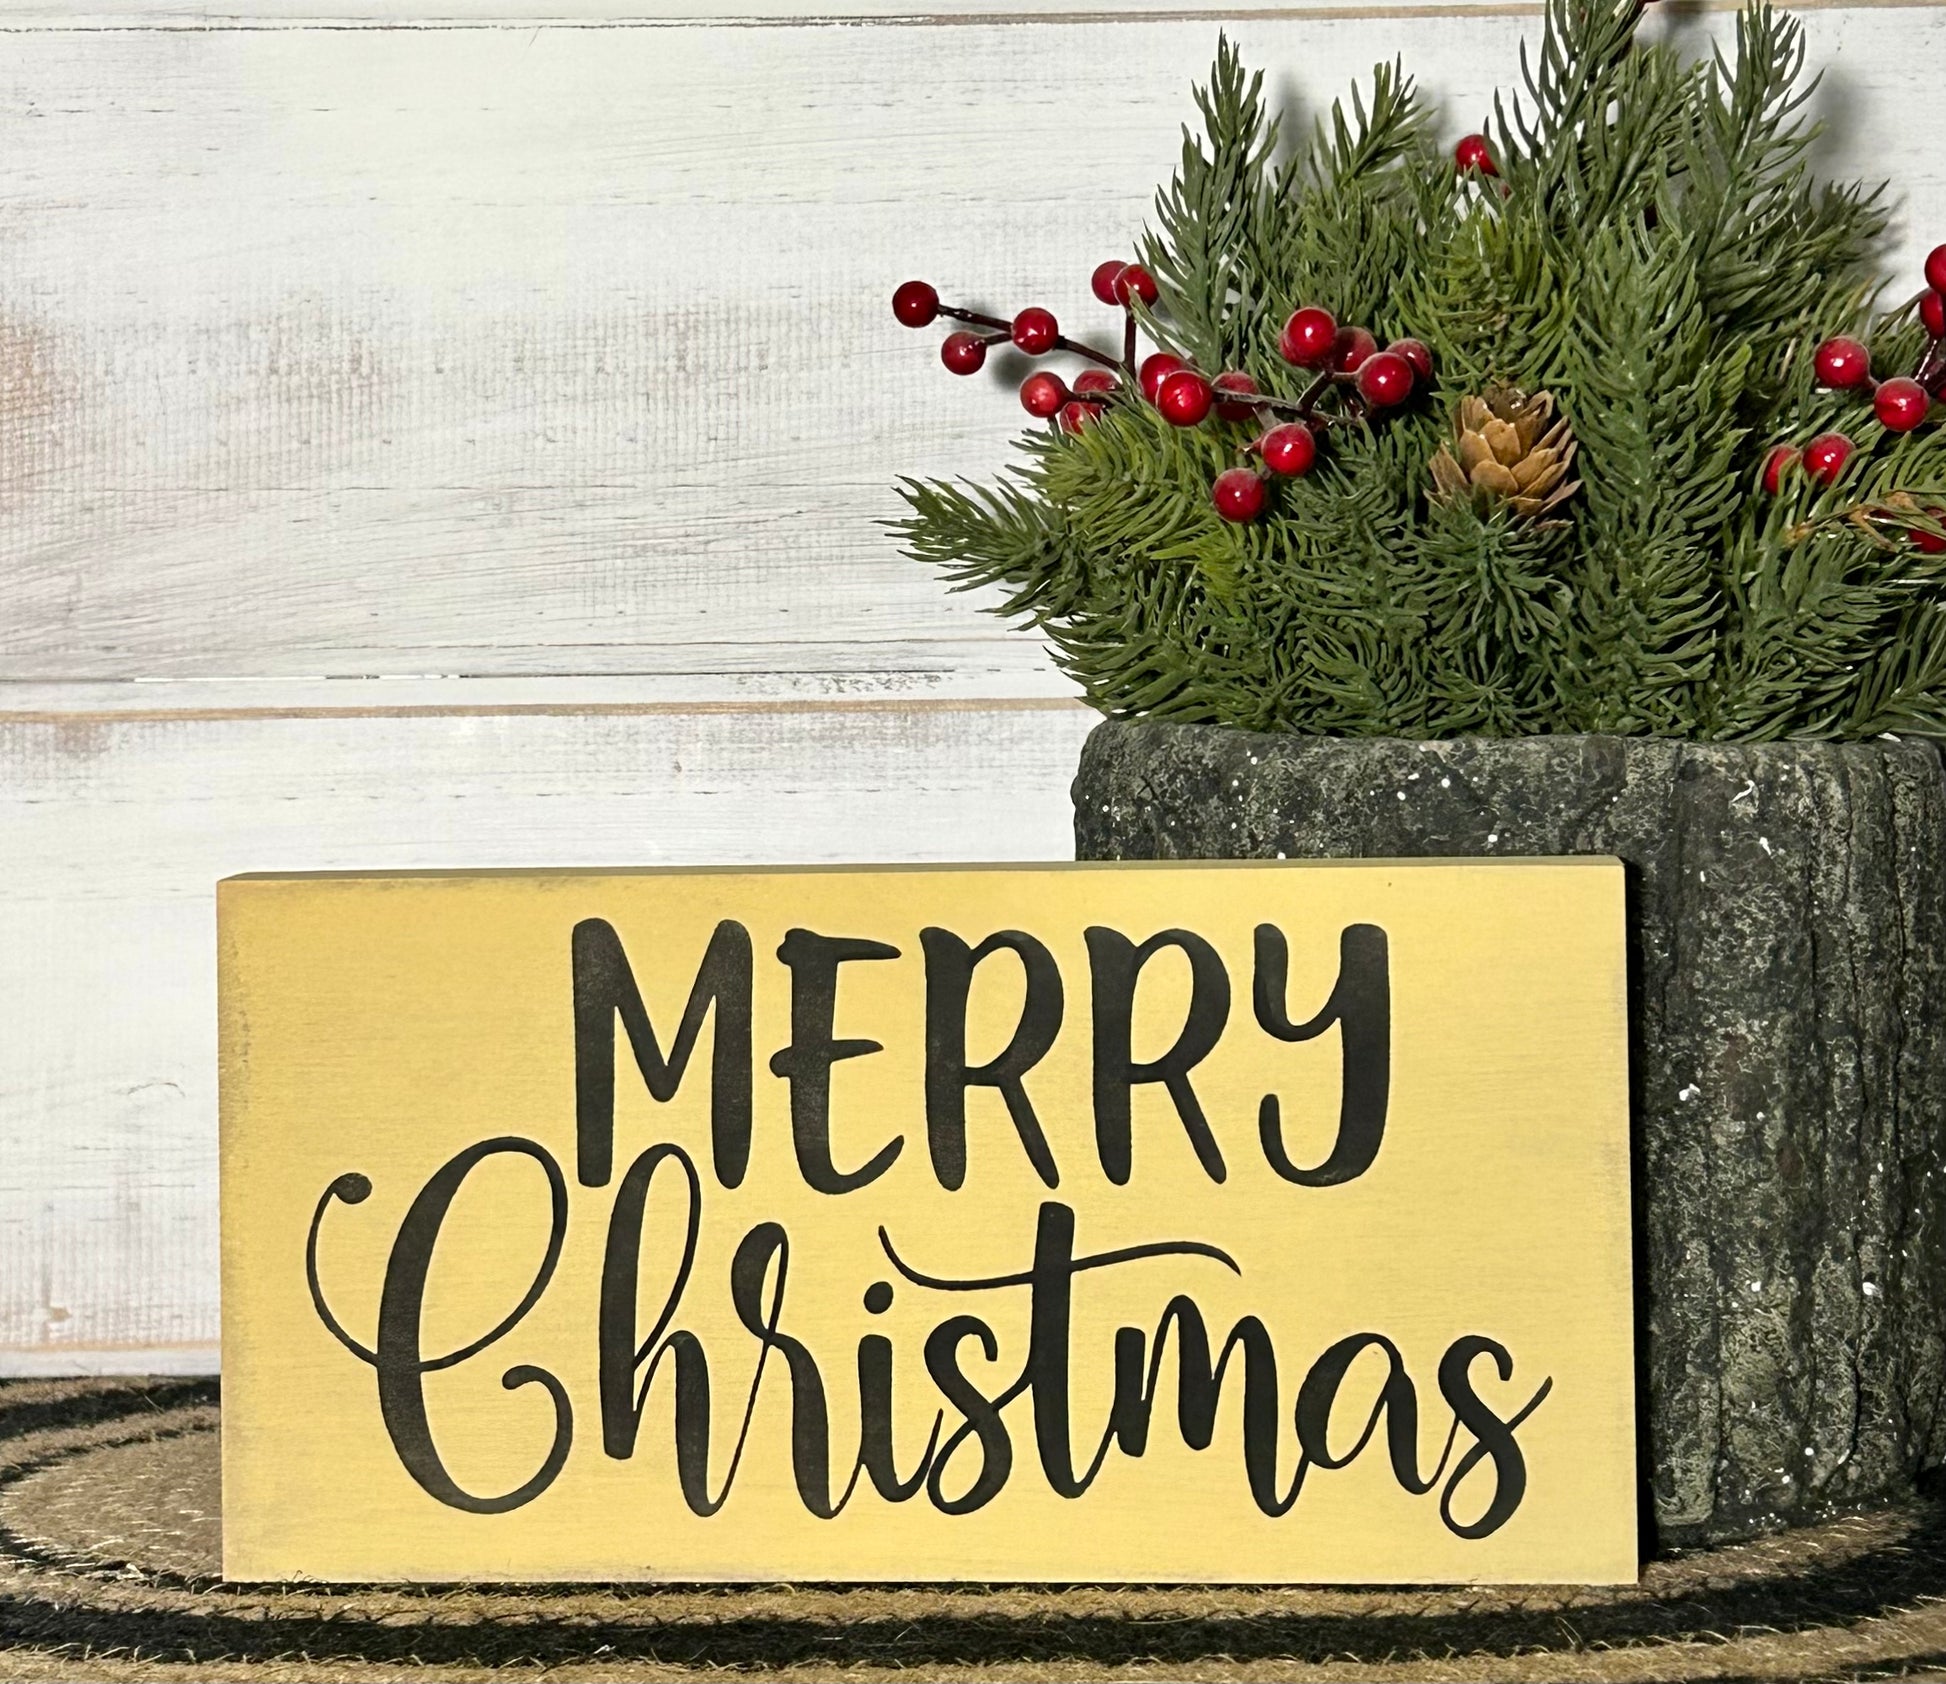 "Merry Christmas" wood sign